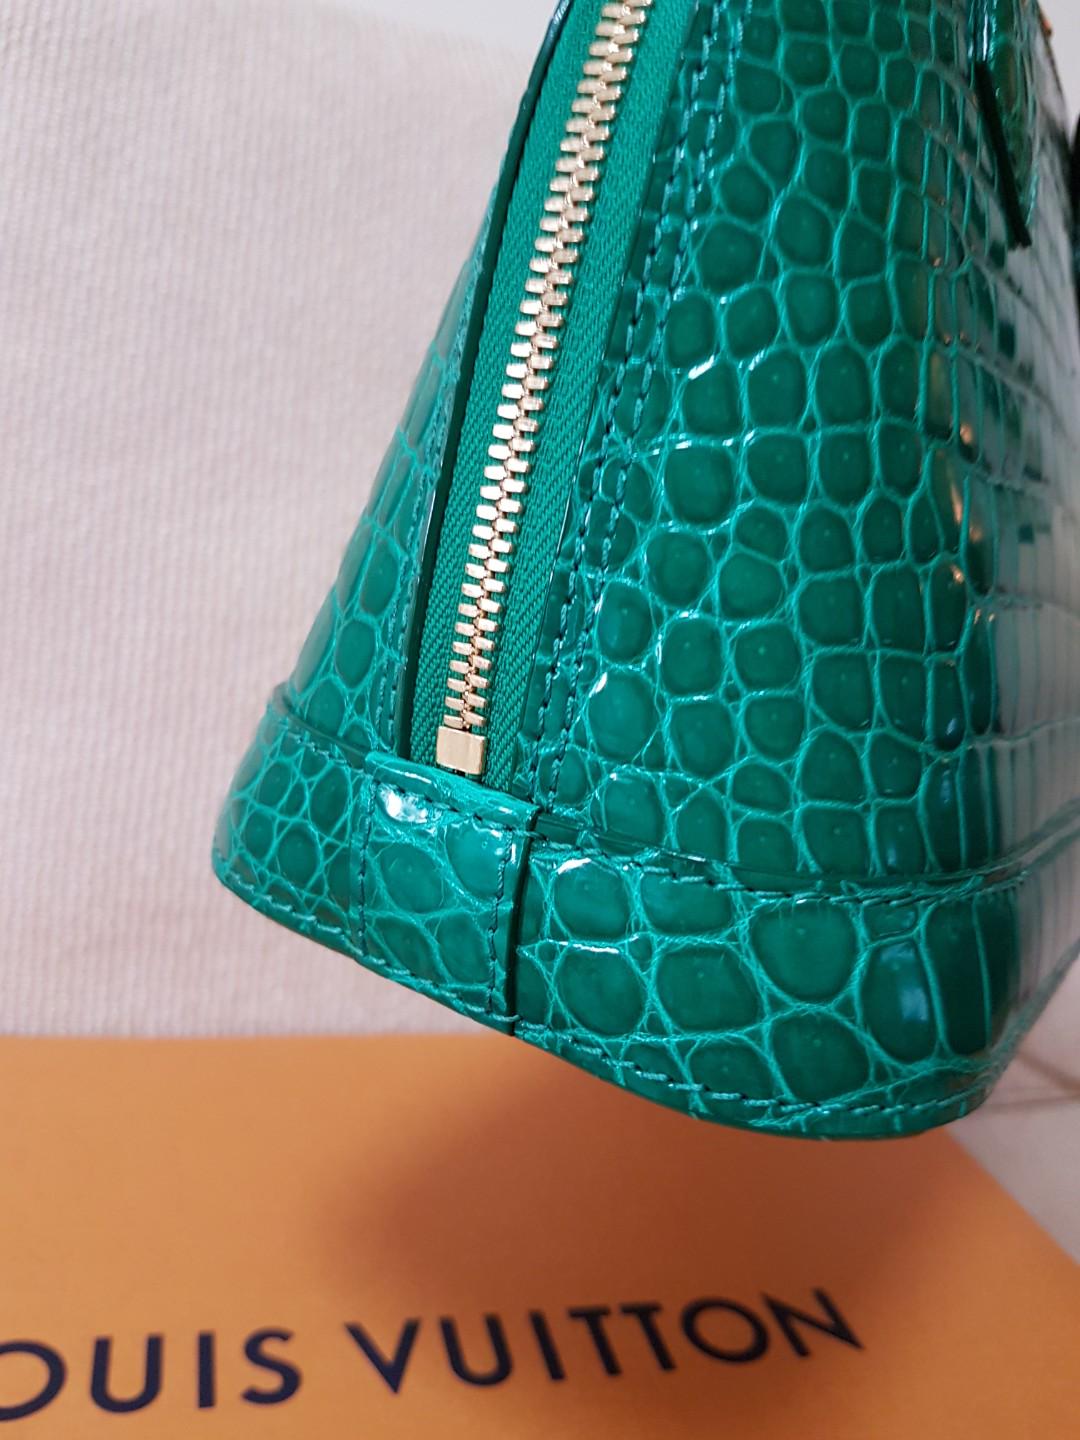 Alma bb crocodile handbag Louis Vuitton Green in Crocodile - 32555620